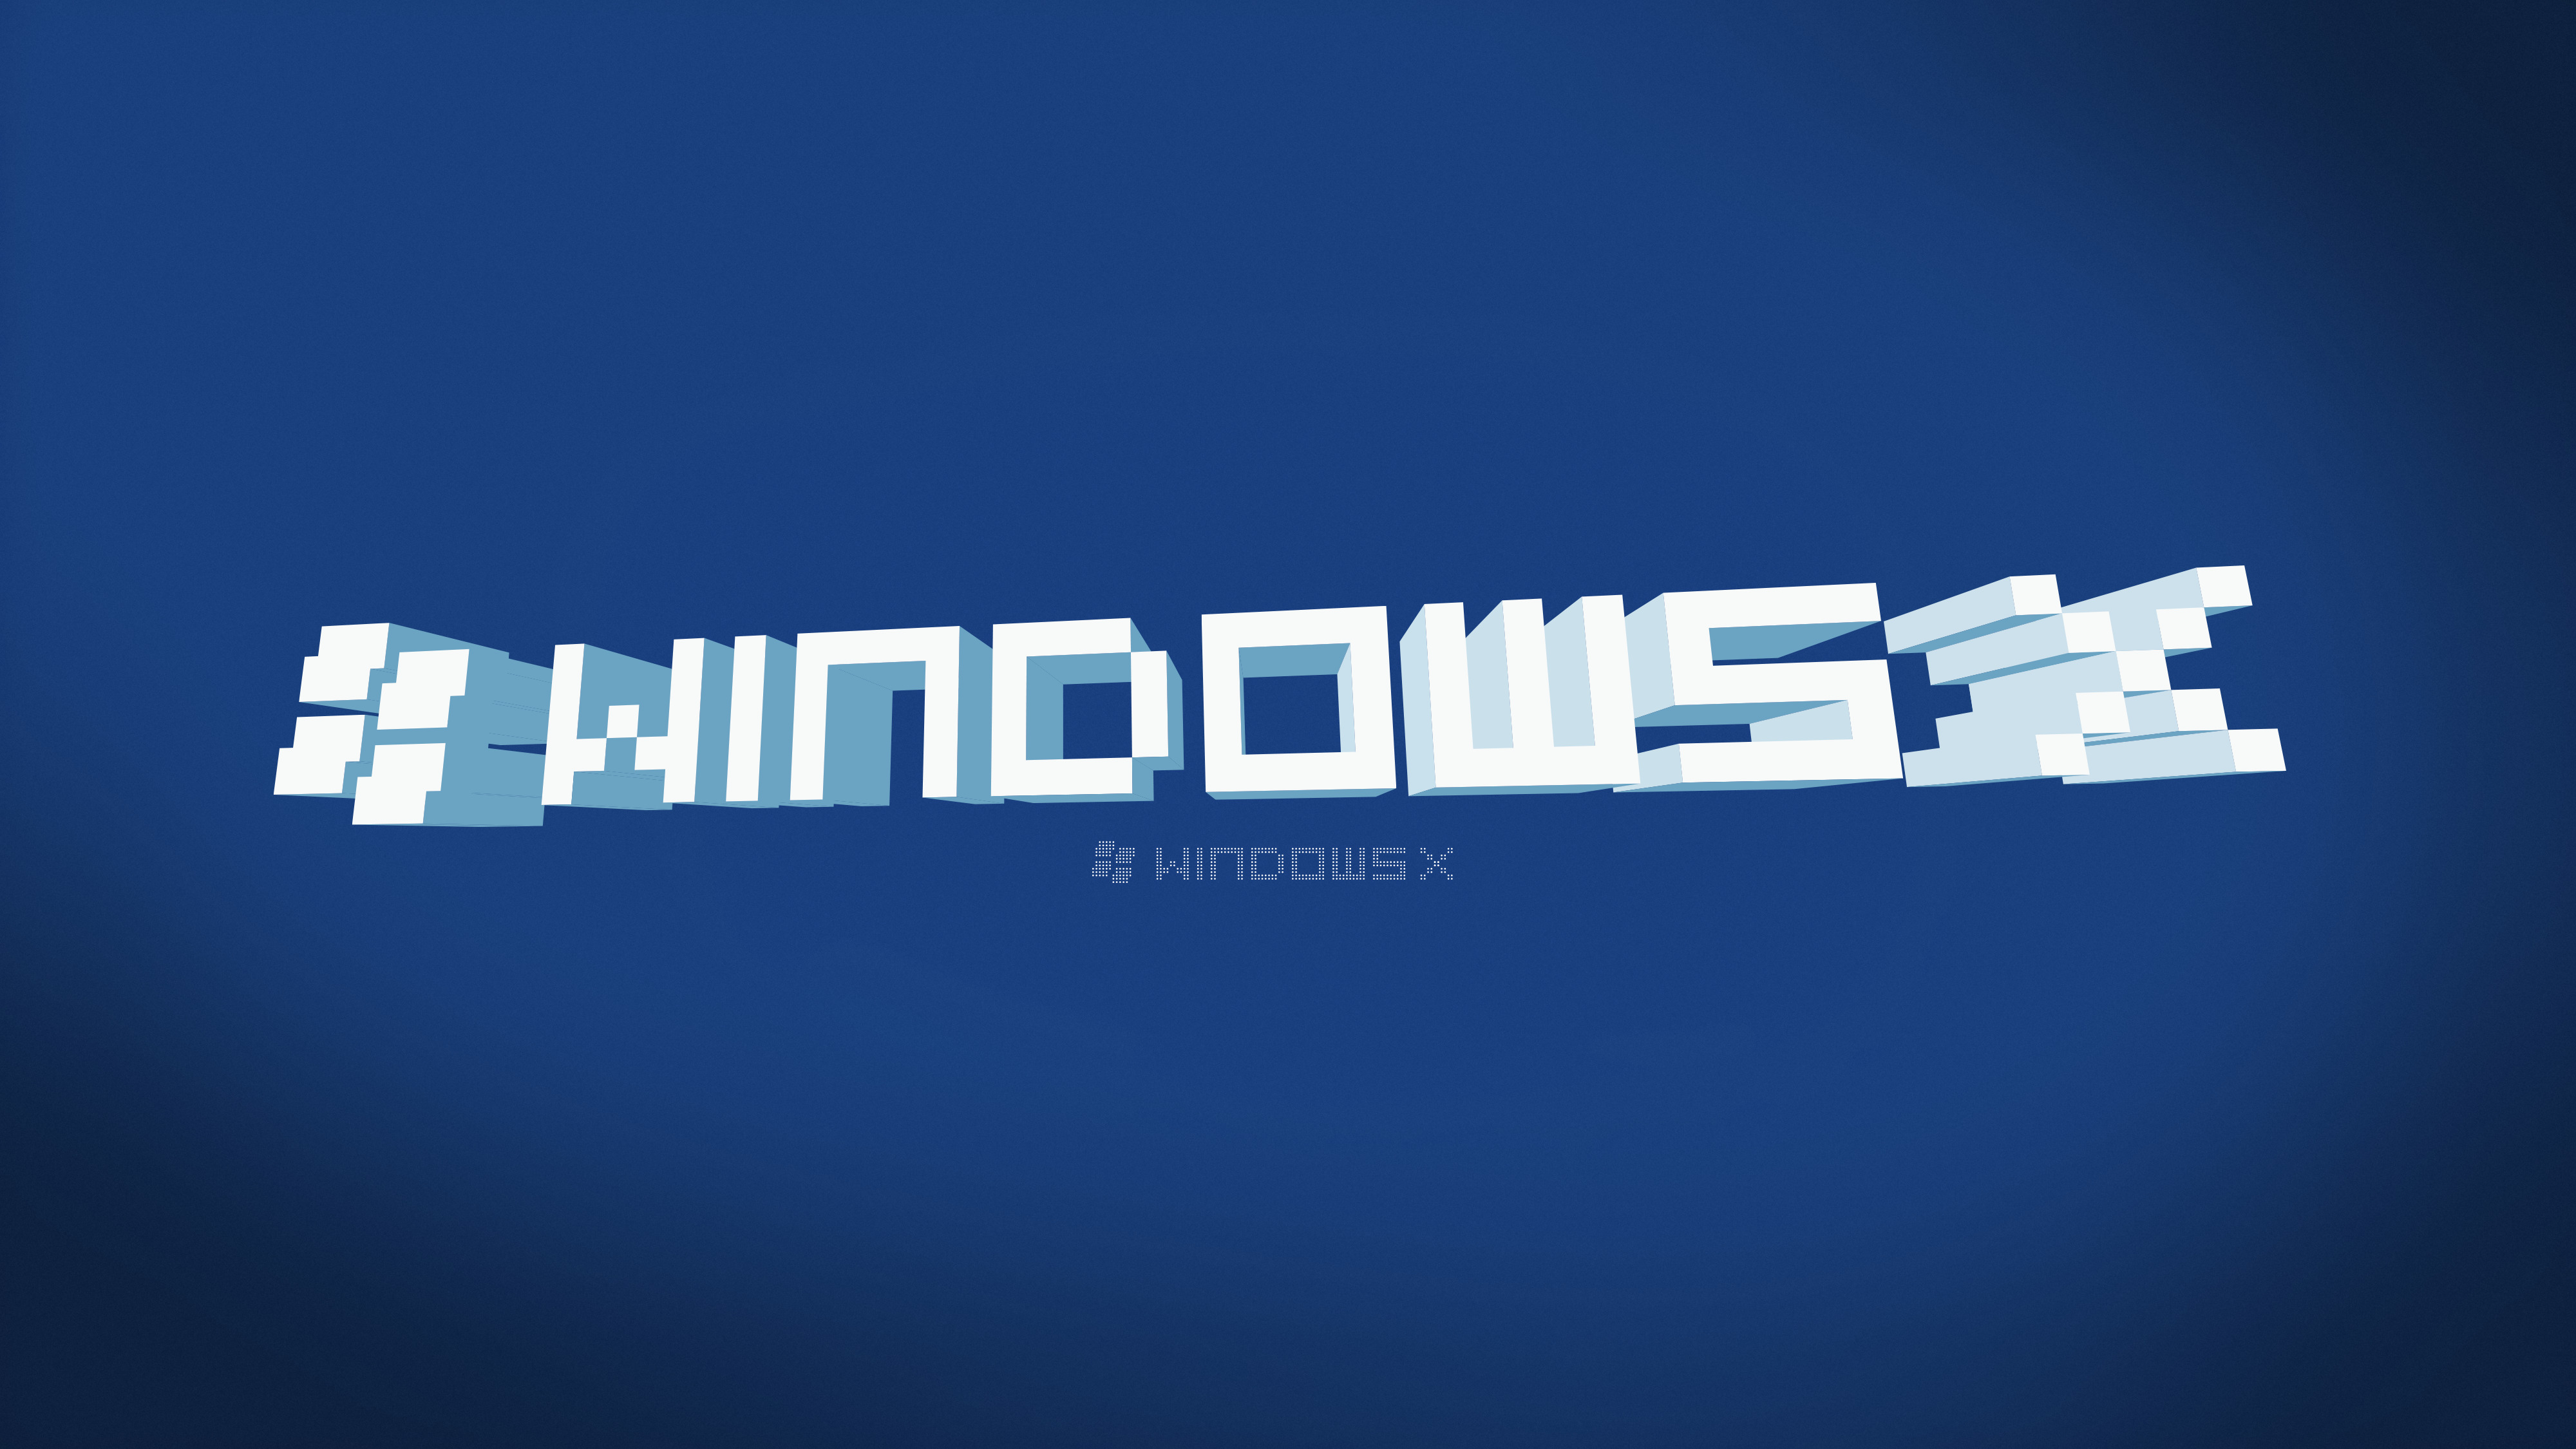 Microsoft Windows, Windows 10 Anniversary Wallpaper